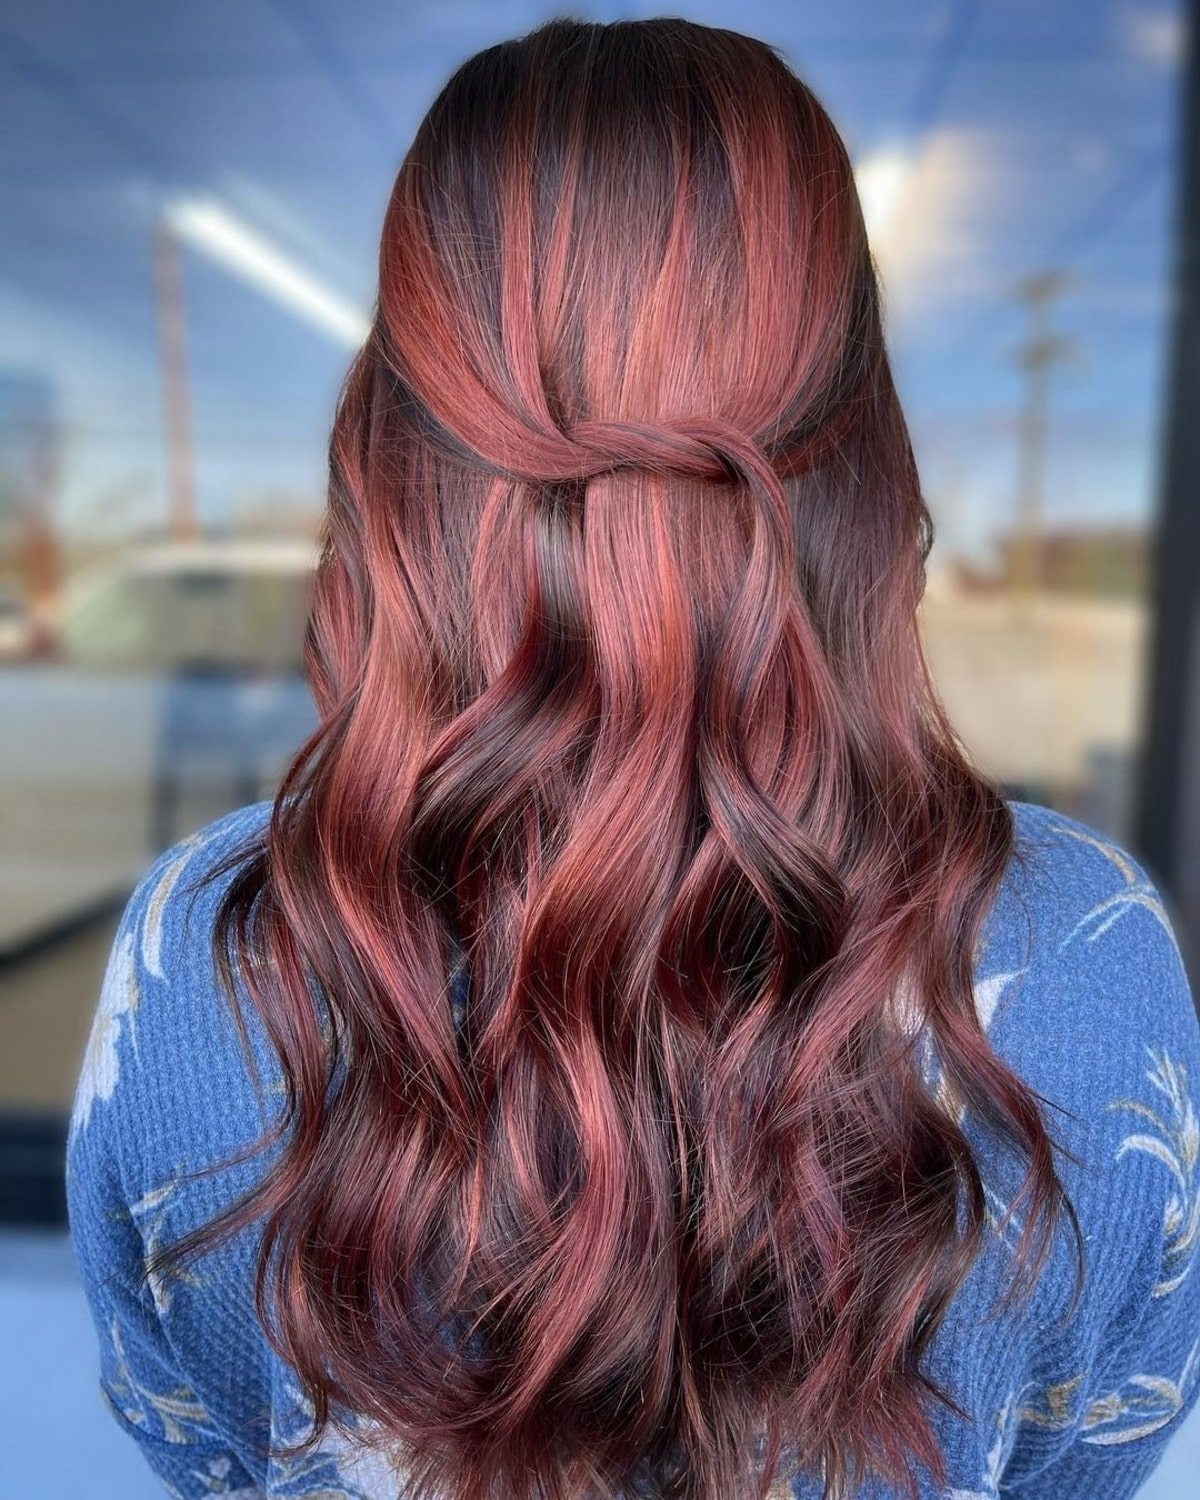 Amazing Red Highlights on Dark Hair